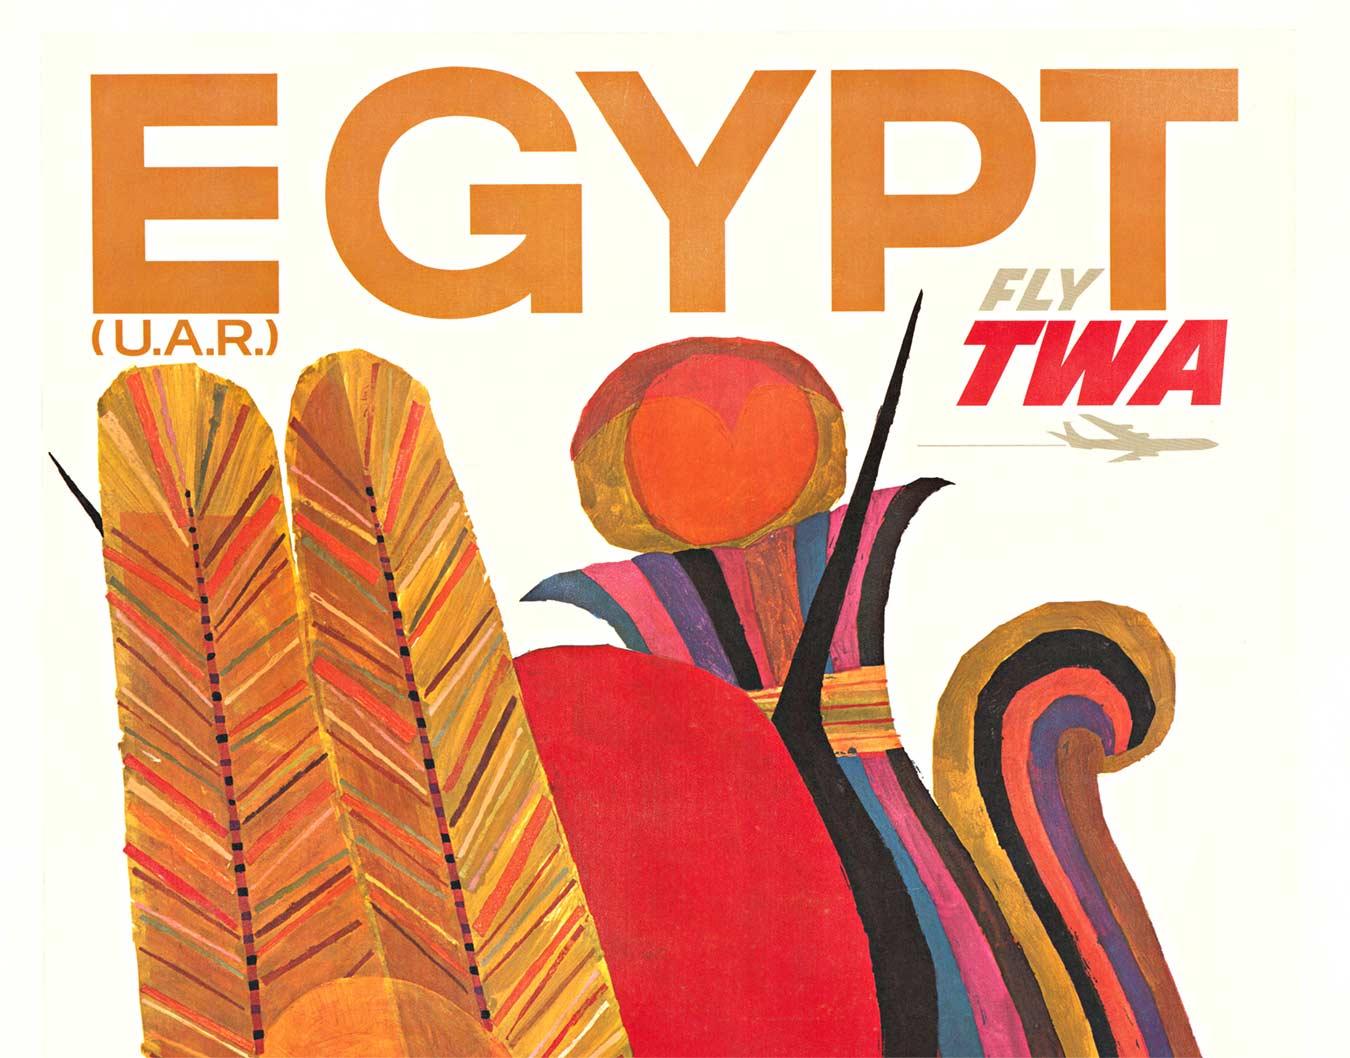 Original Egypt Fly TWA 3-Pharaohs vintage travel poster - Print by David Klein